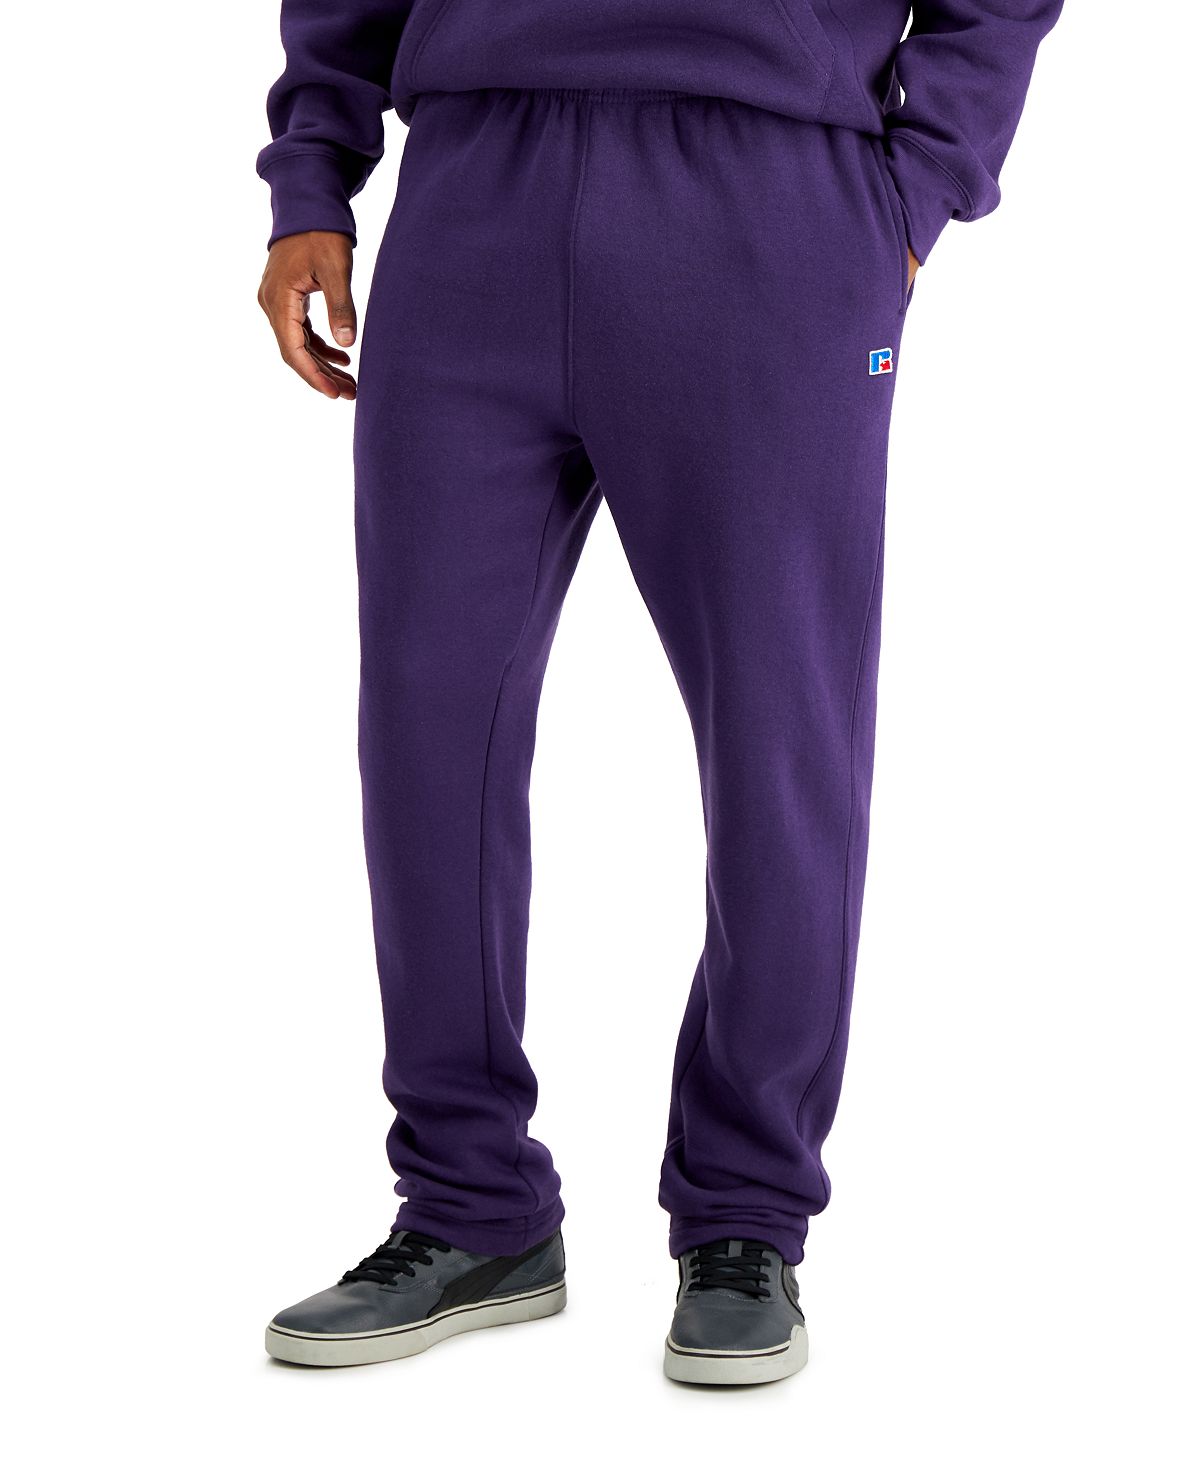 Russell Athletic Open Bottom Fleece Pants Purple